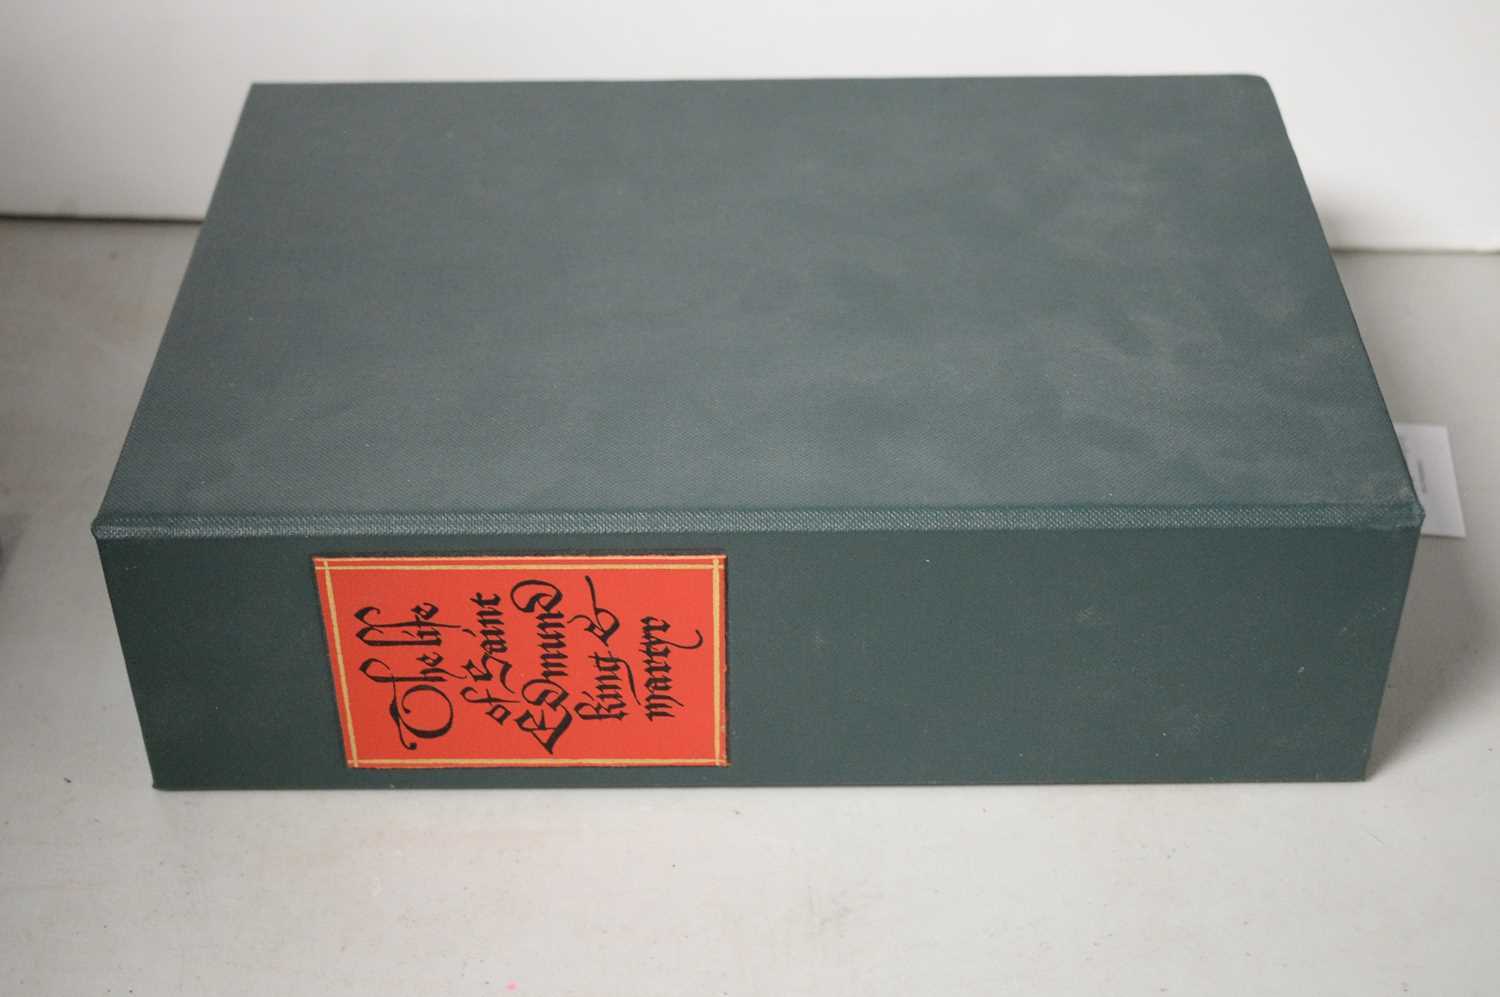 Lot 422 - The Life of Saint Edmund King and Martyr, Folio Society volume.